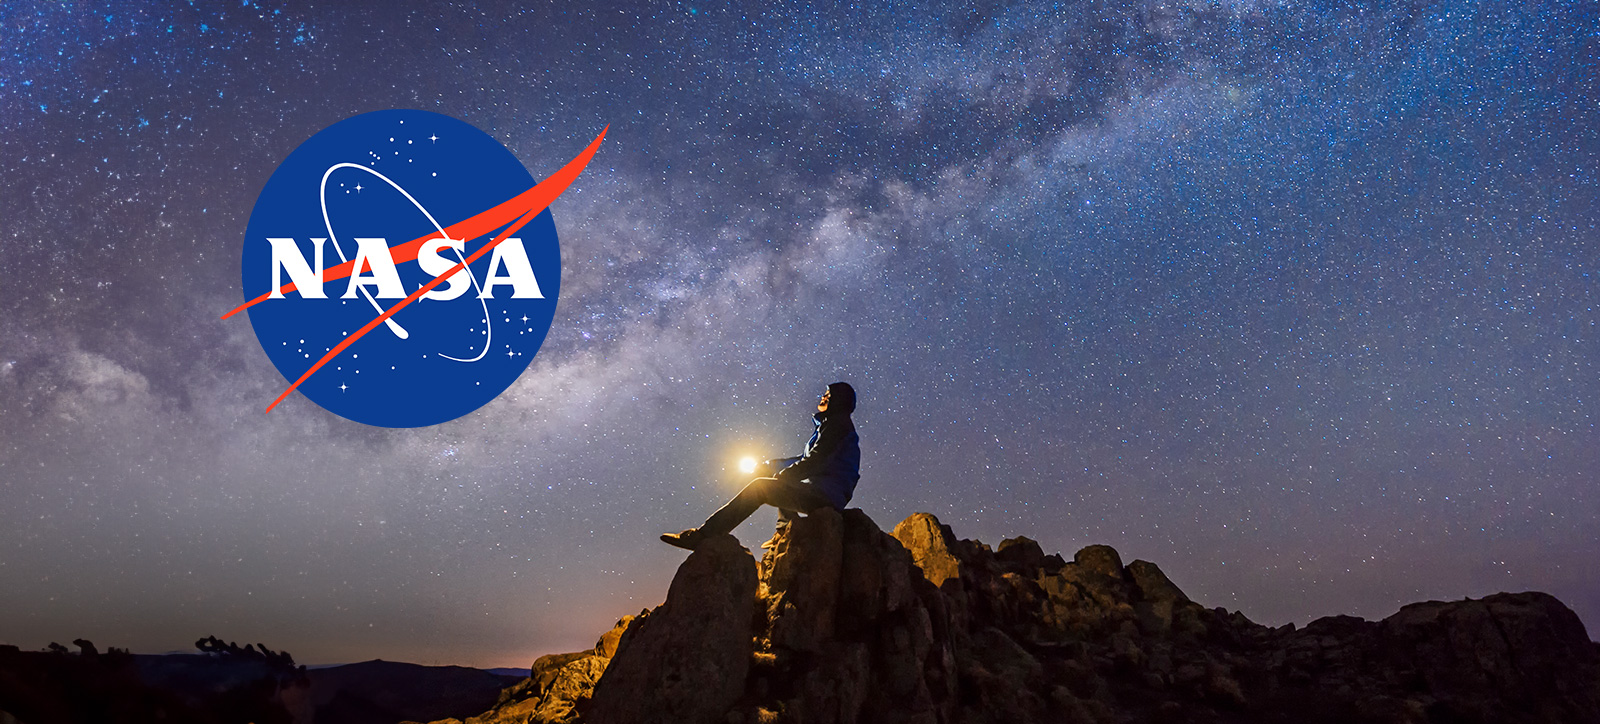 NASA logo in a starry night sky